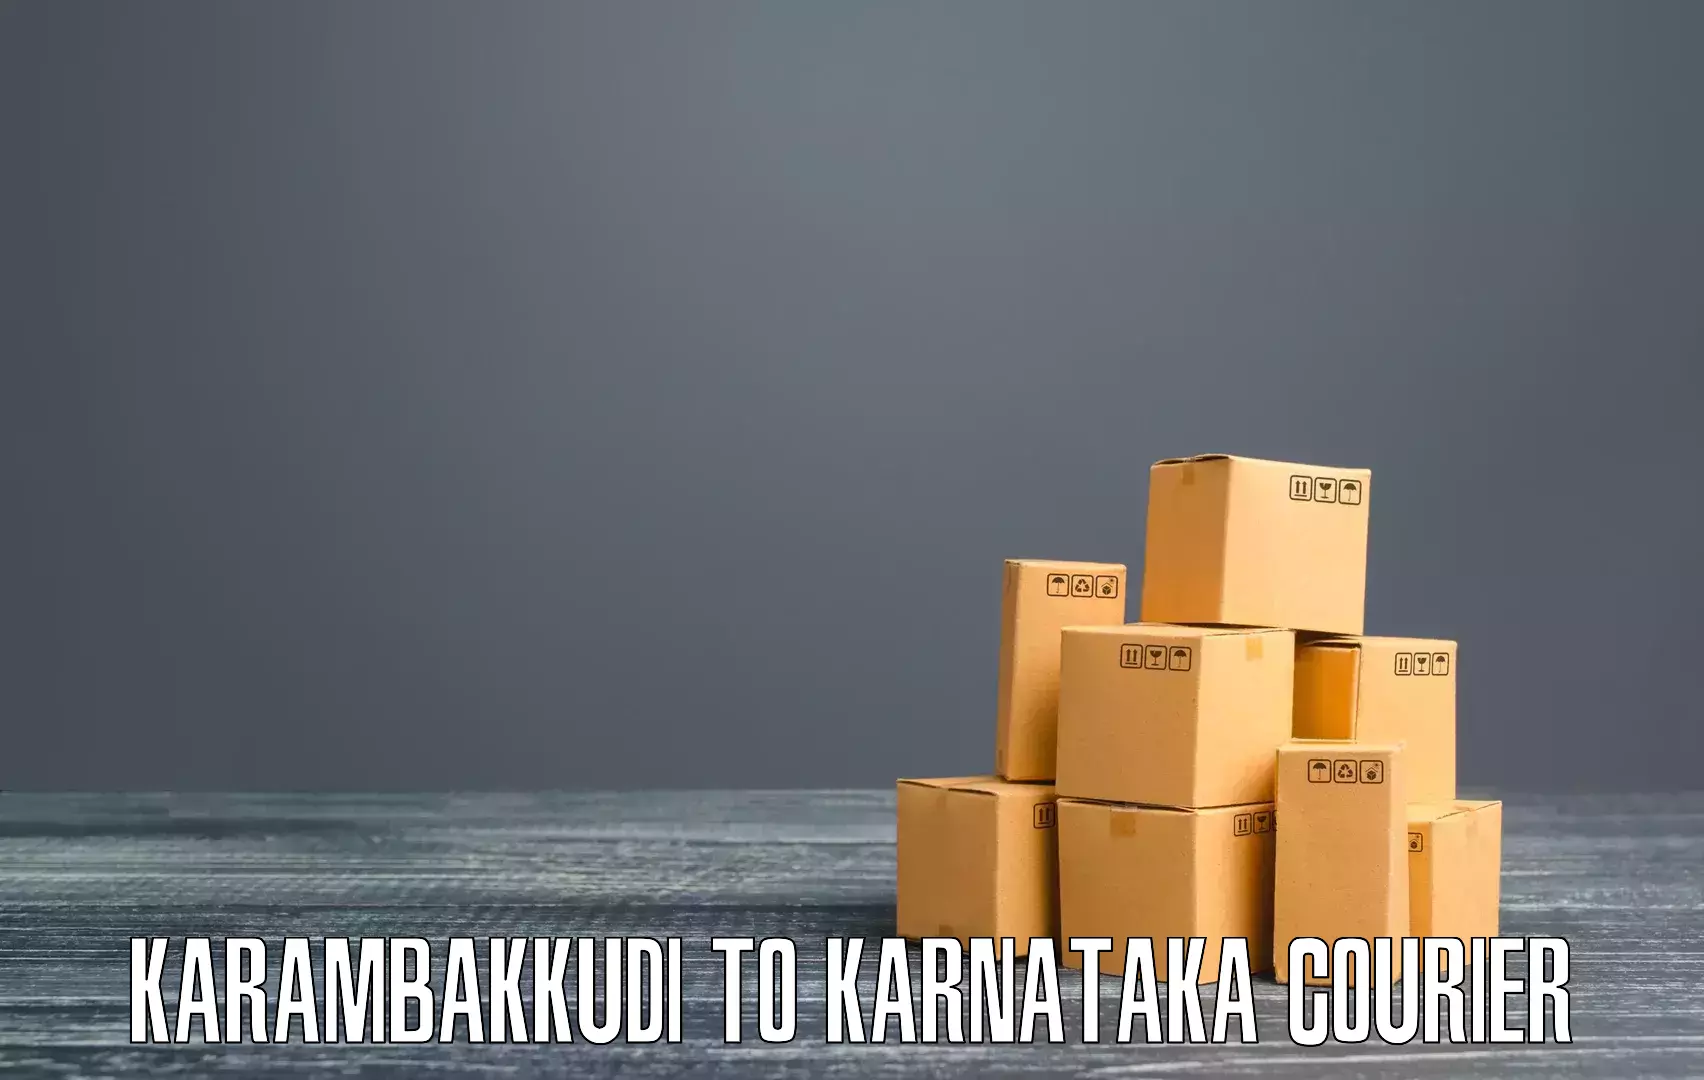 Digital shipping tools Karambakkudi to Karnataka